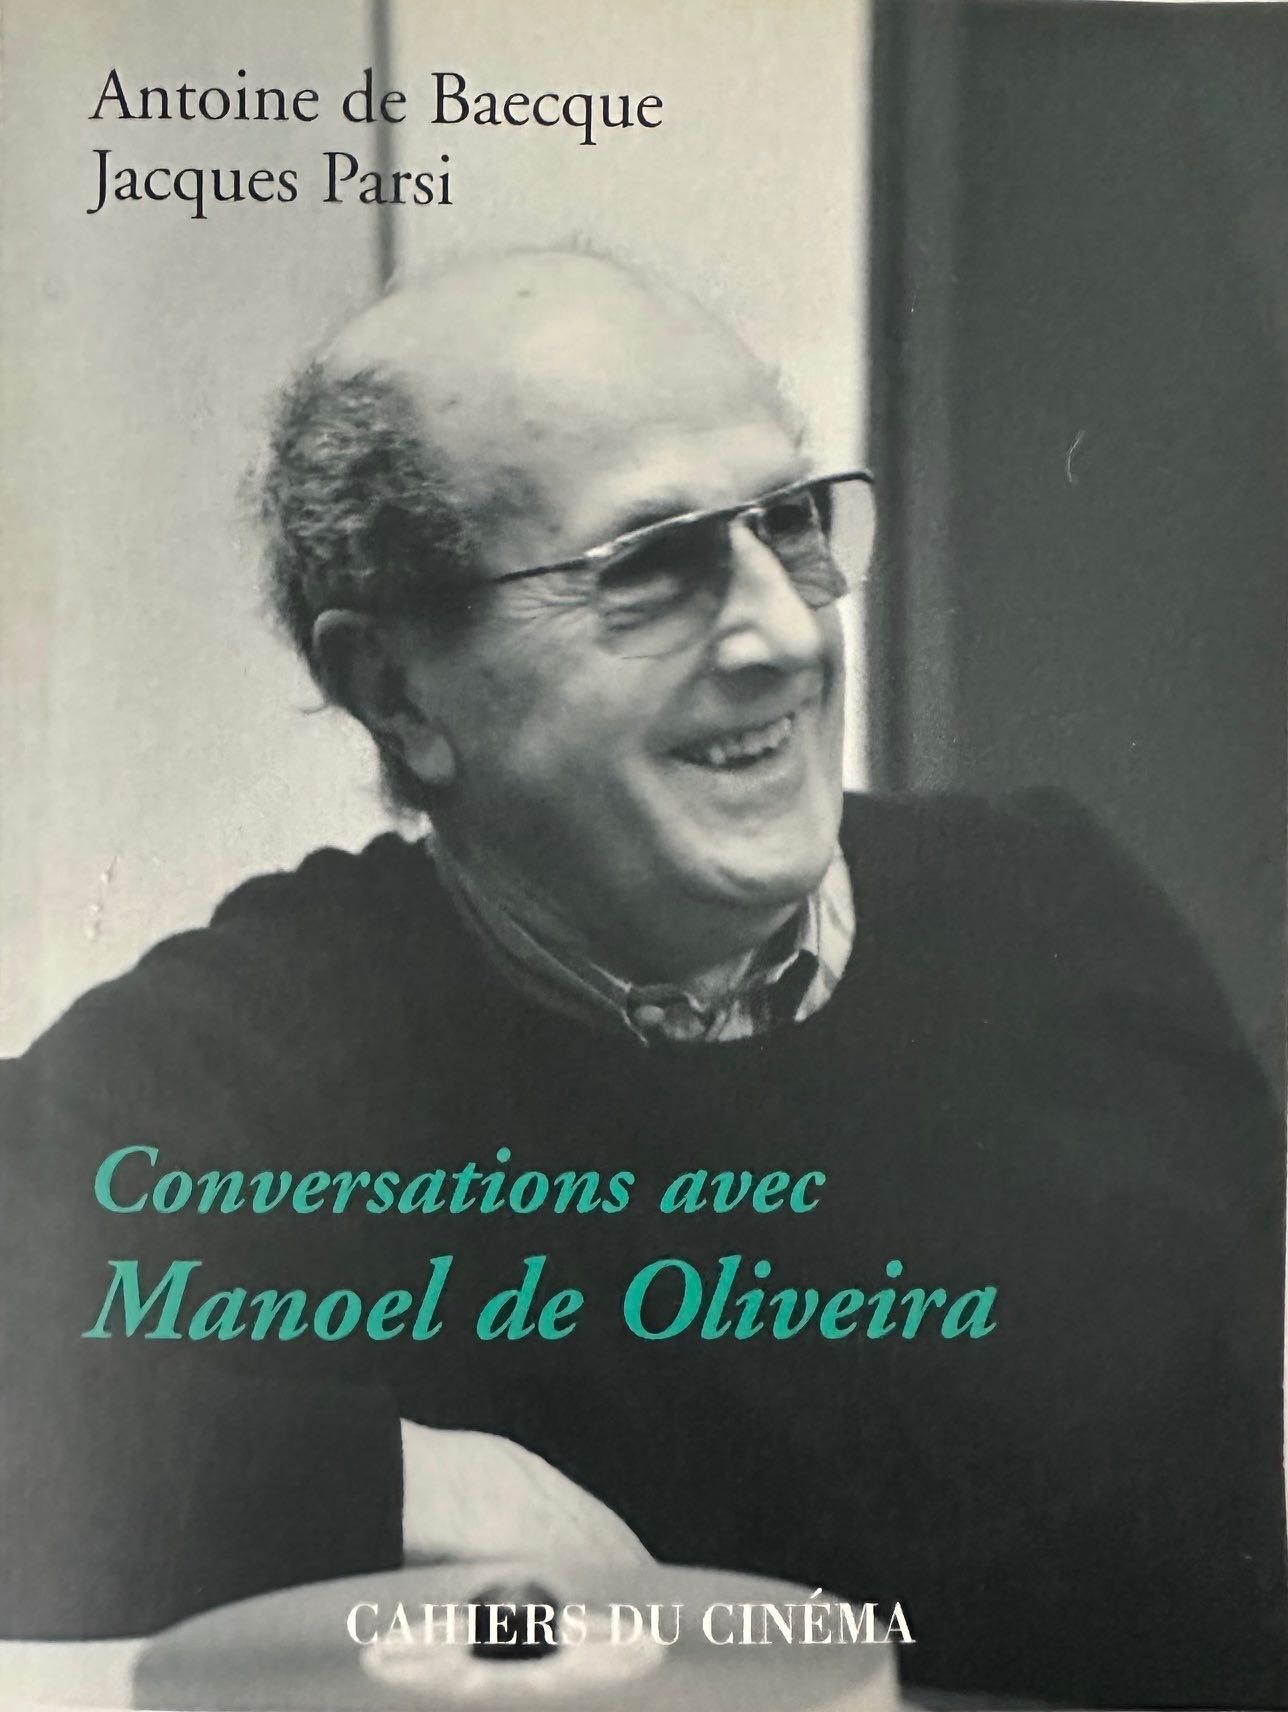 Conversations avec Manoel de Oliveira - Cahiers du Cinéma - 1996